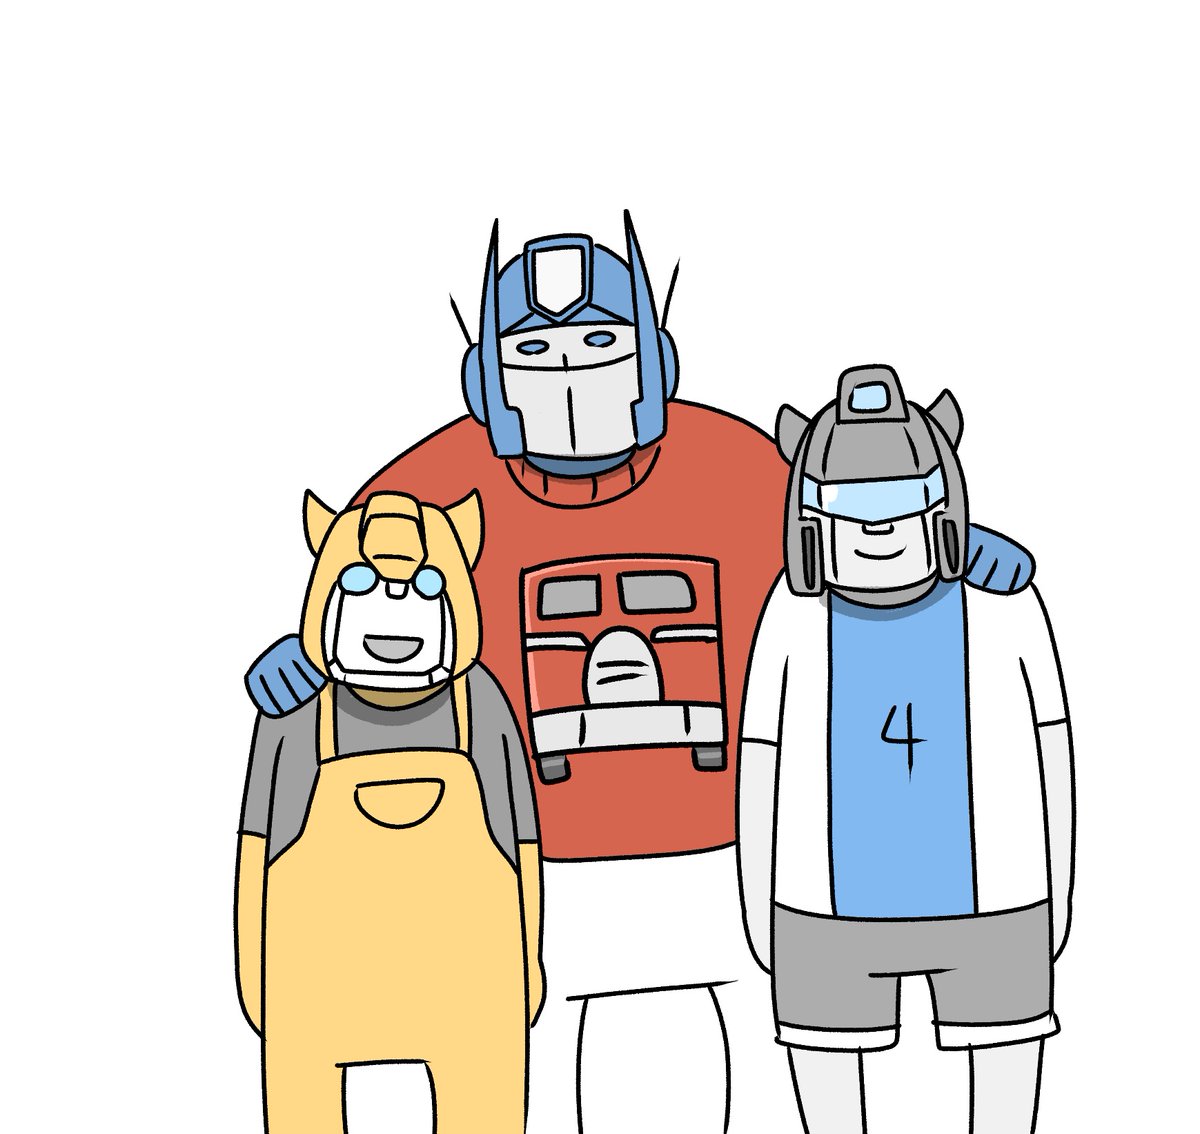 autobot multiple boys 3boys robot overalls white background blue eyes  illustration images